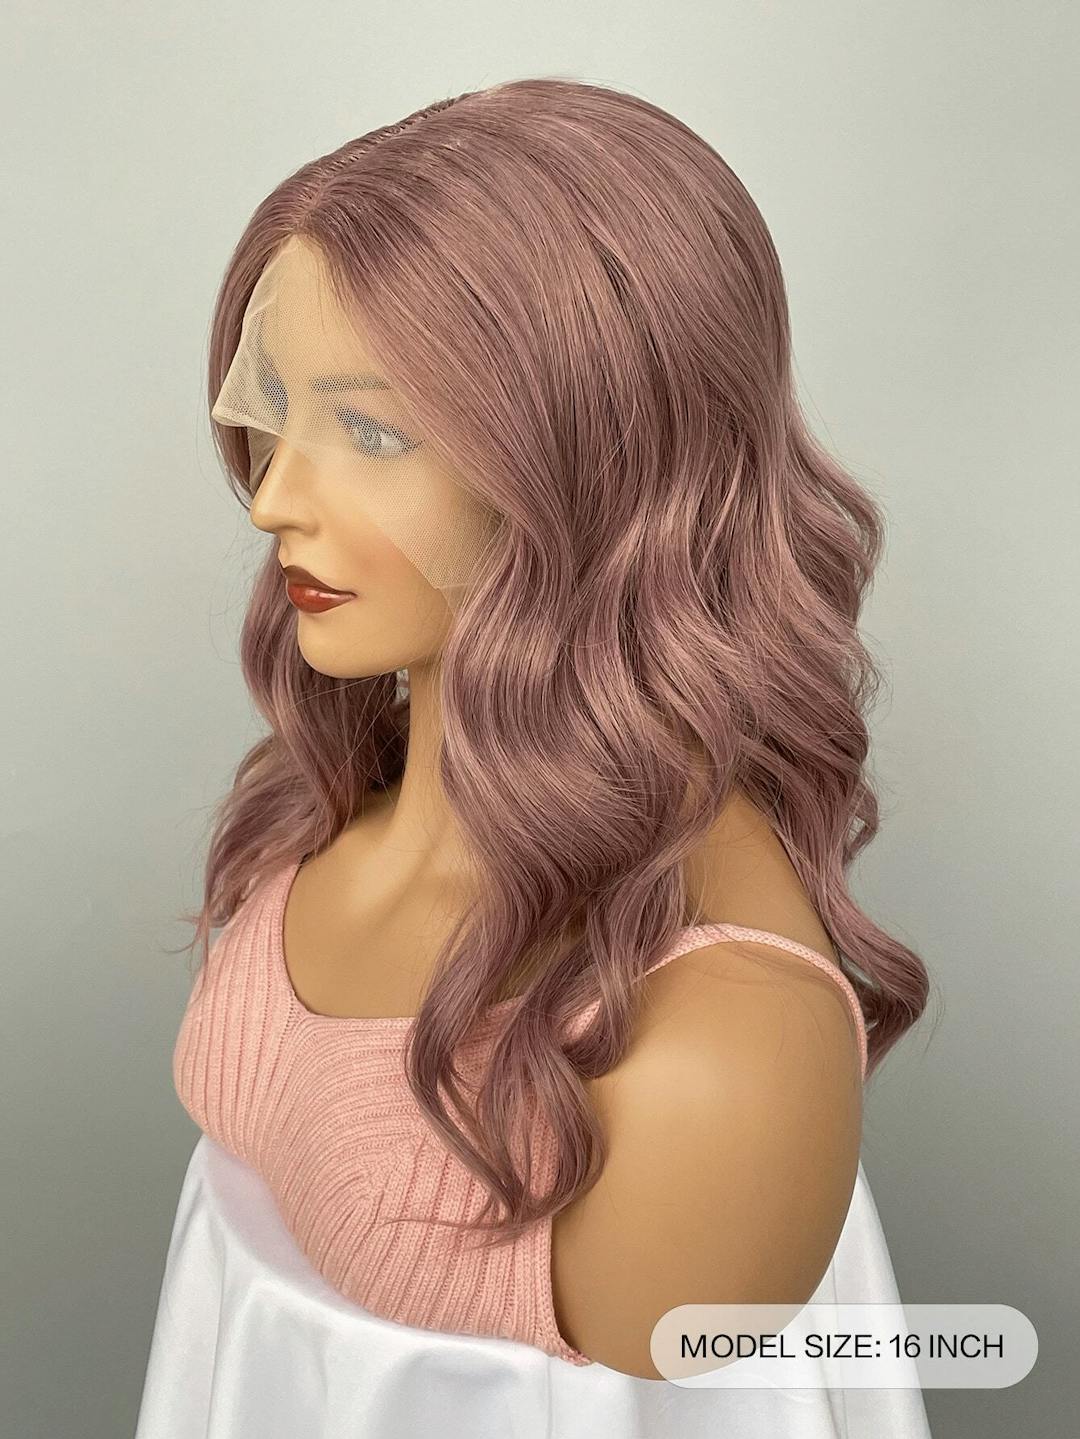 pink bob wig